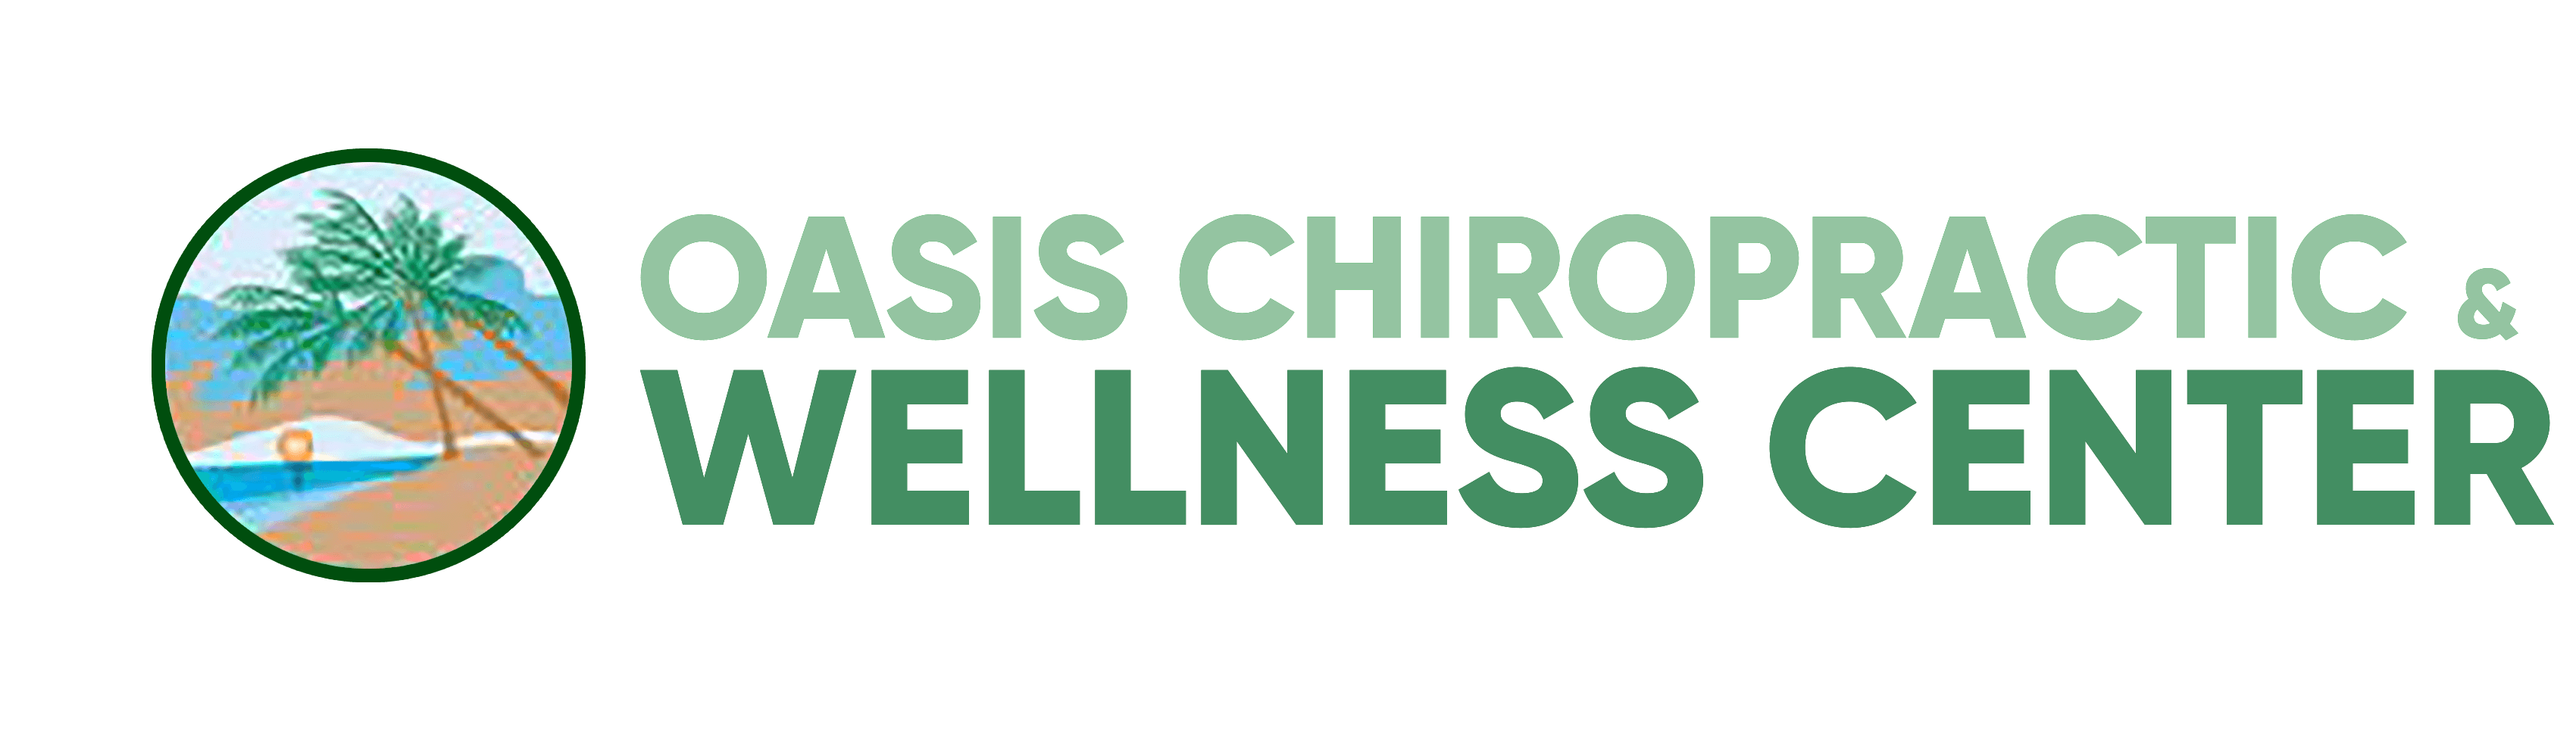 oasis chiropractic & wellness center logo